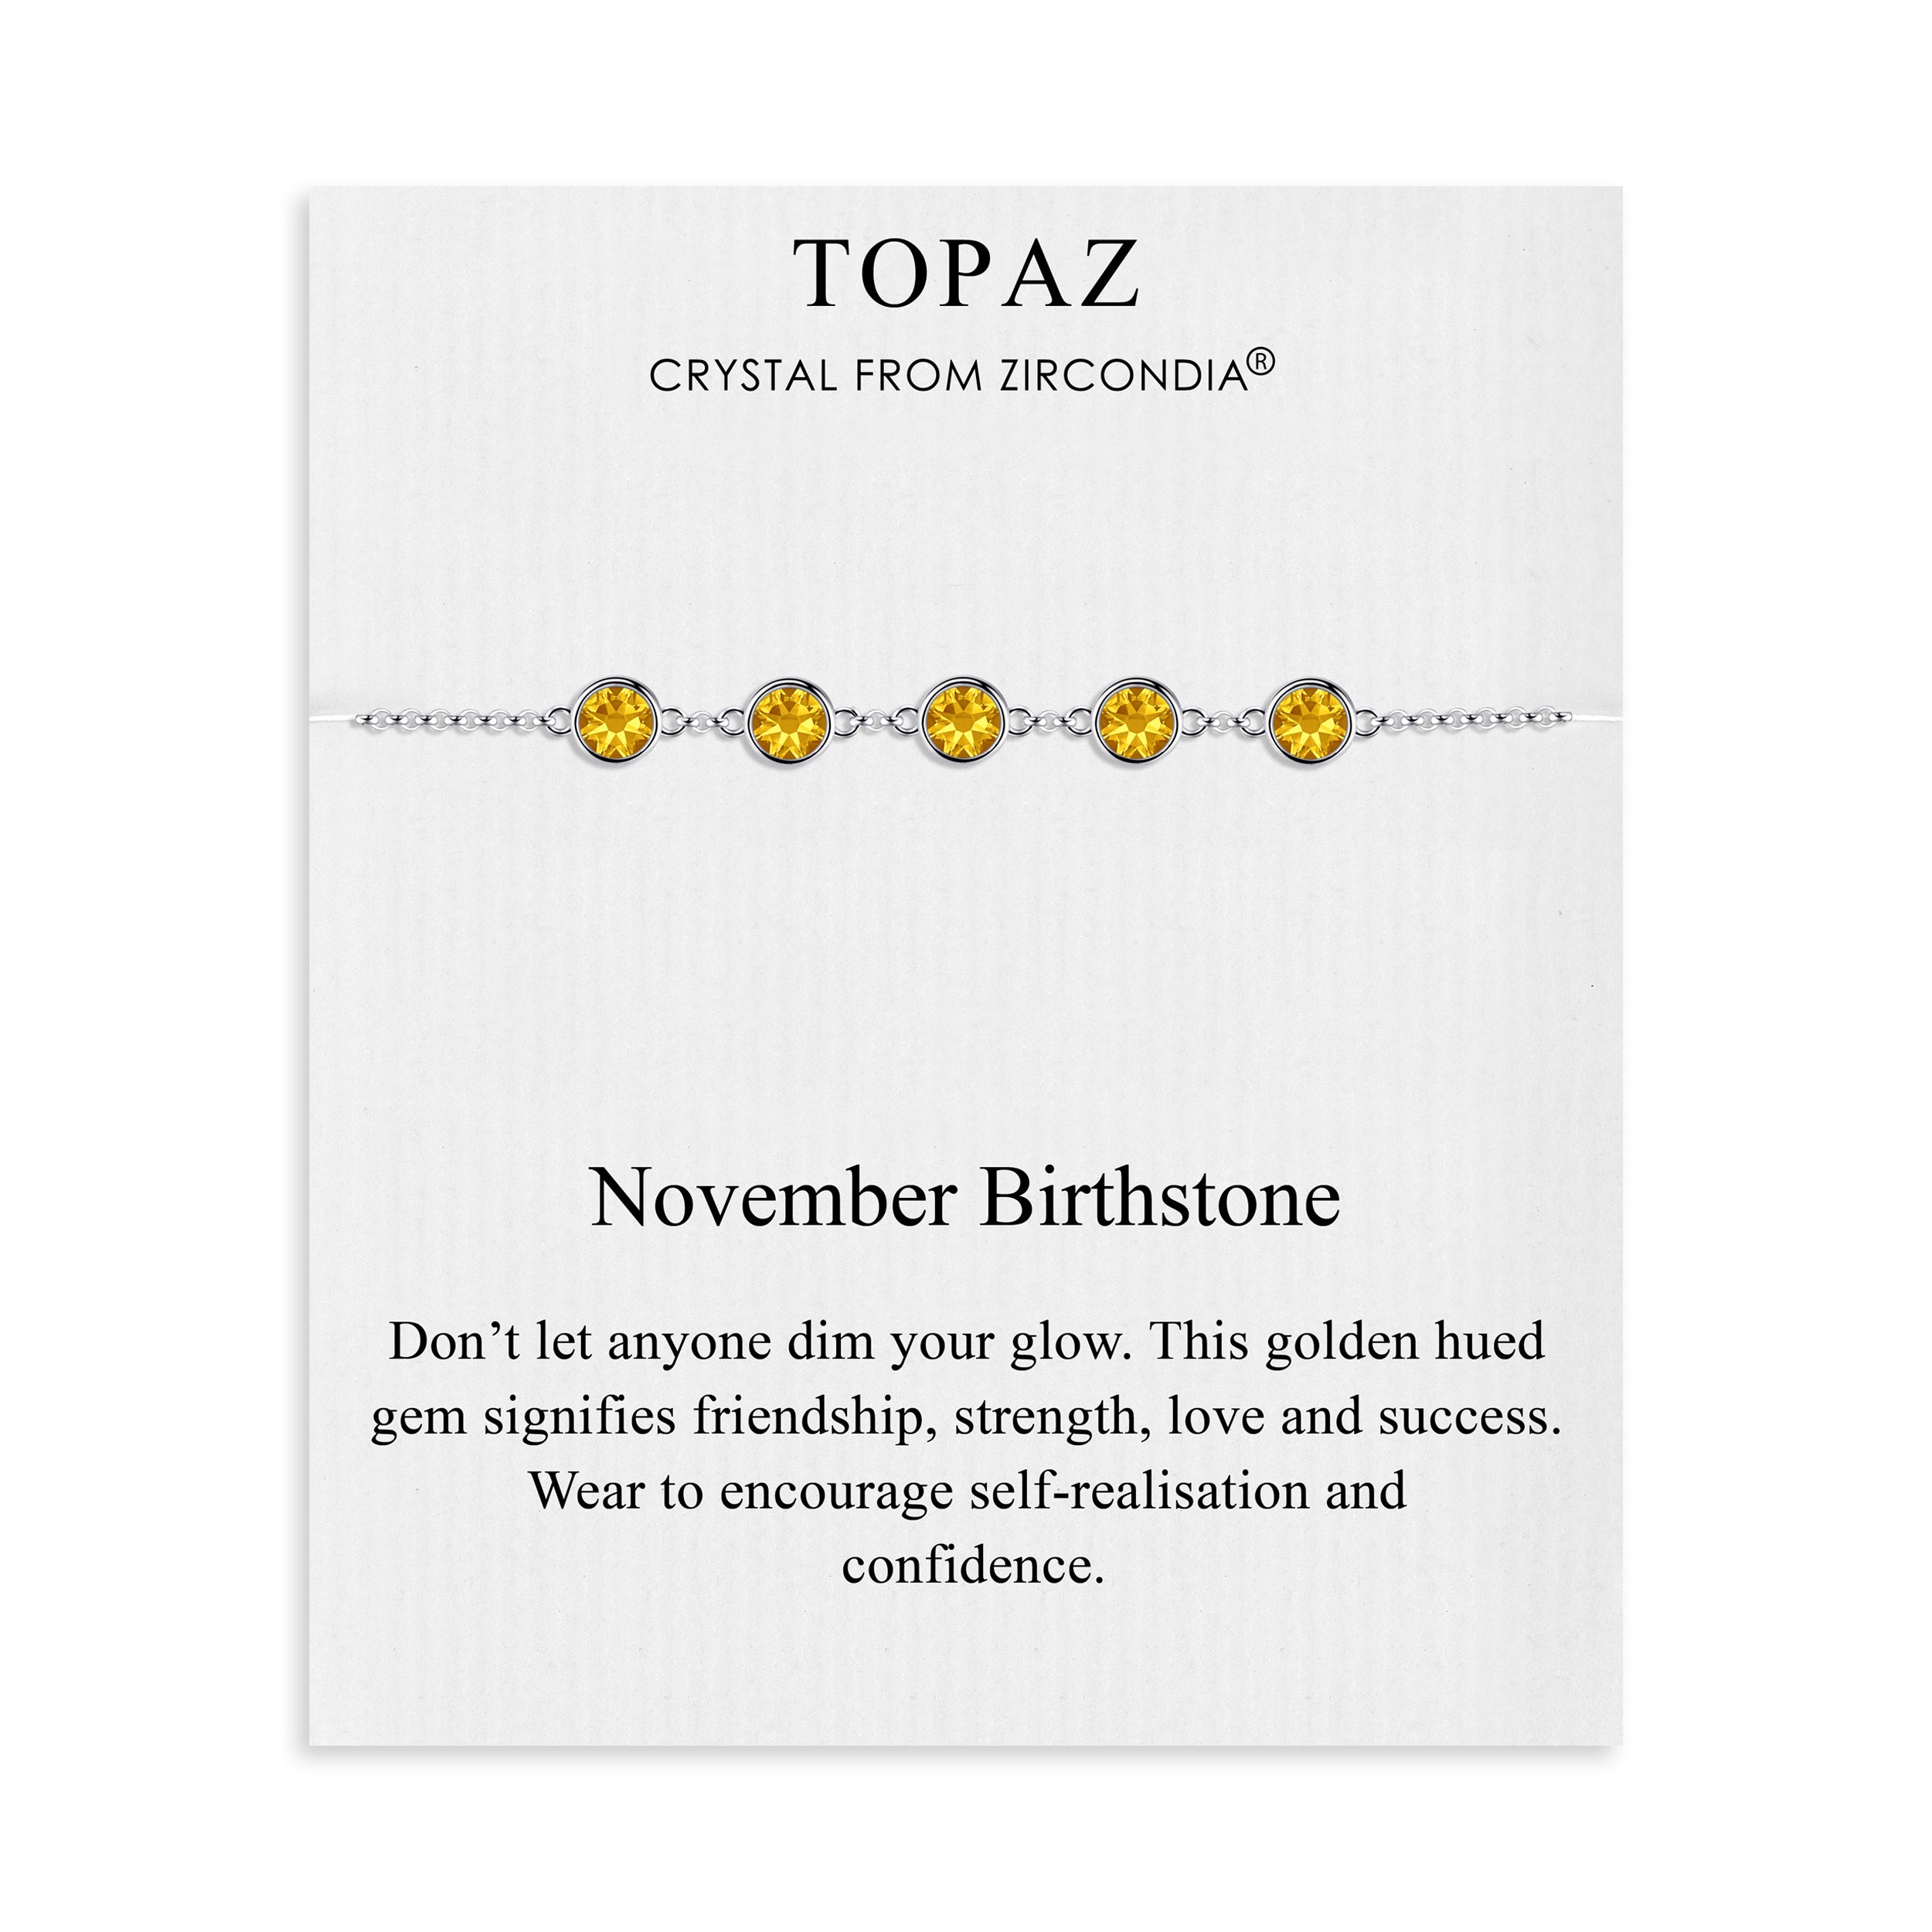 November Birthstone Bracelet Created with Topaz Zircondia® Crystals by Philip Jones Jewellery